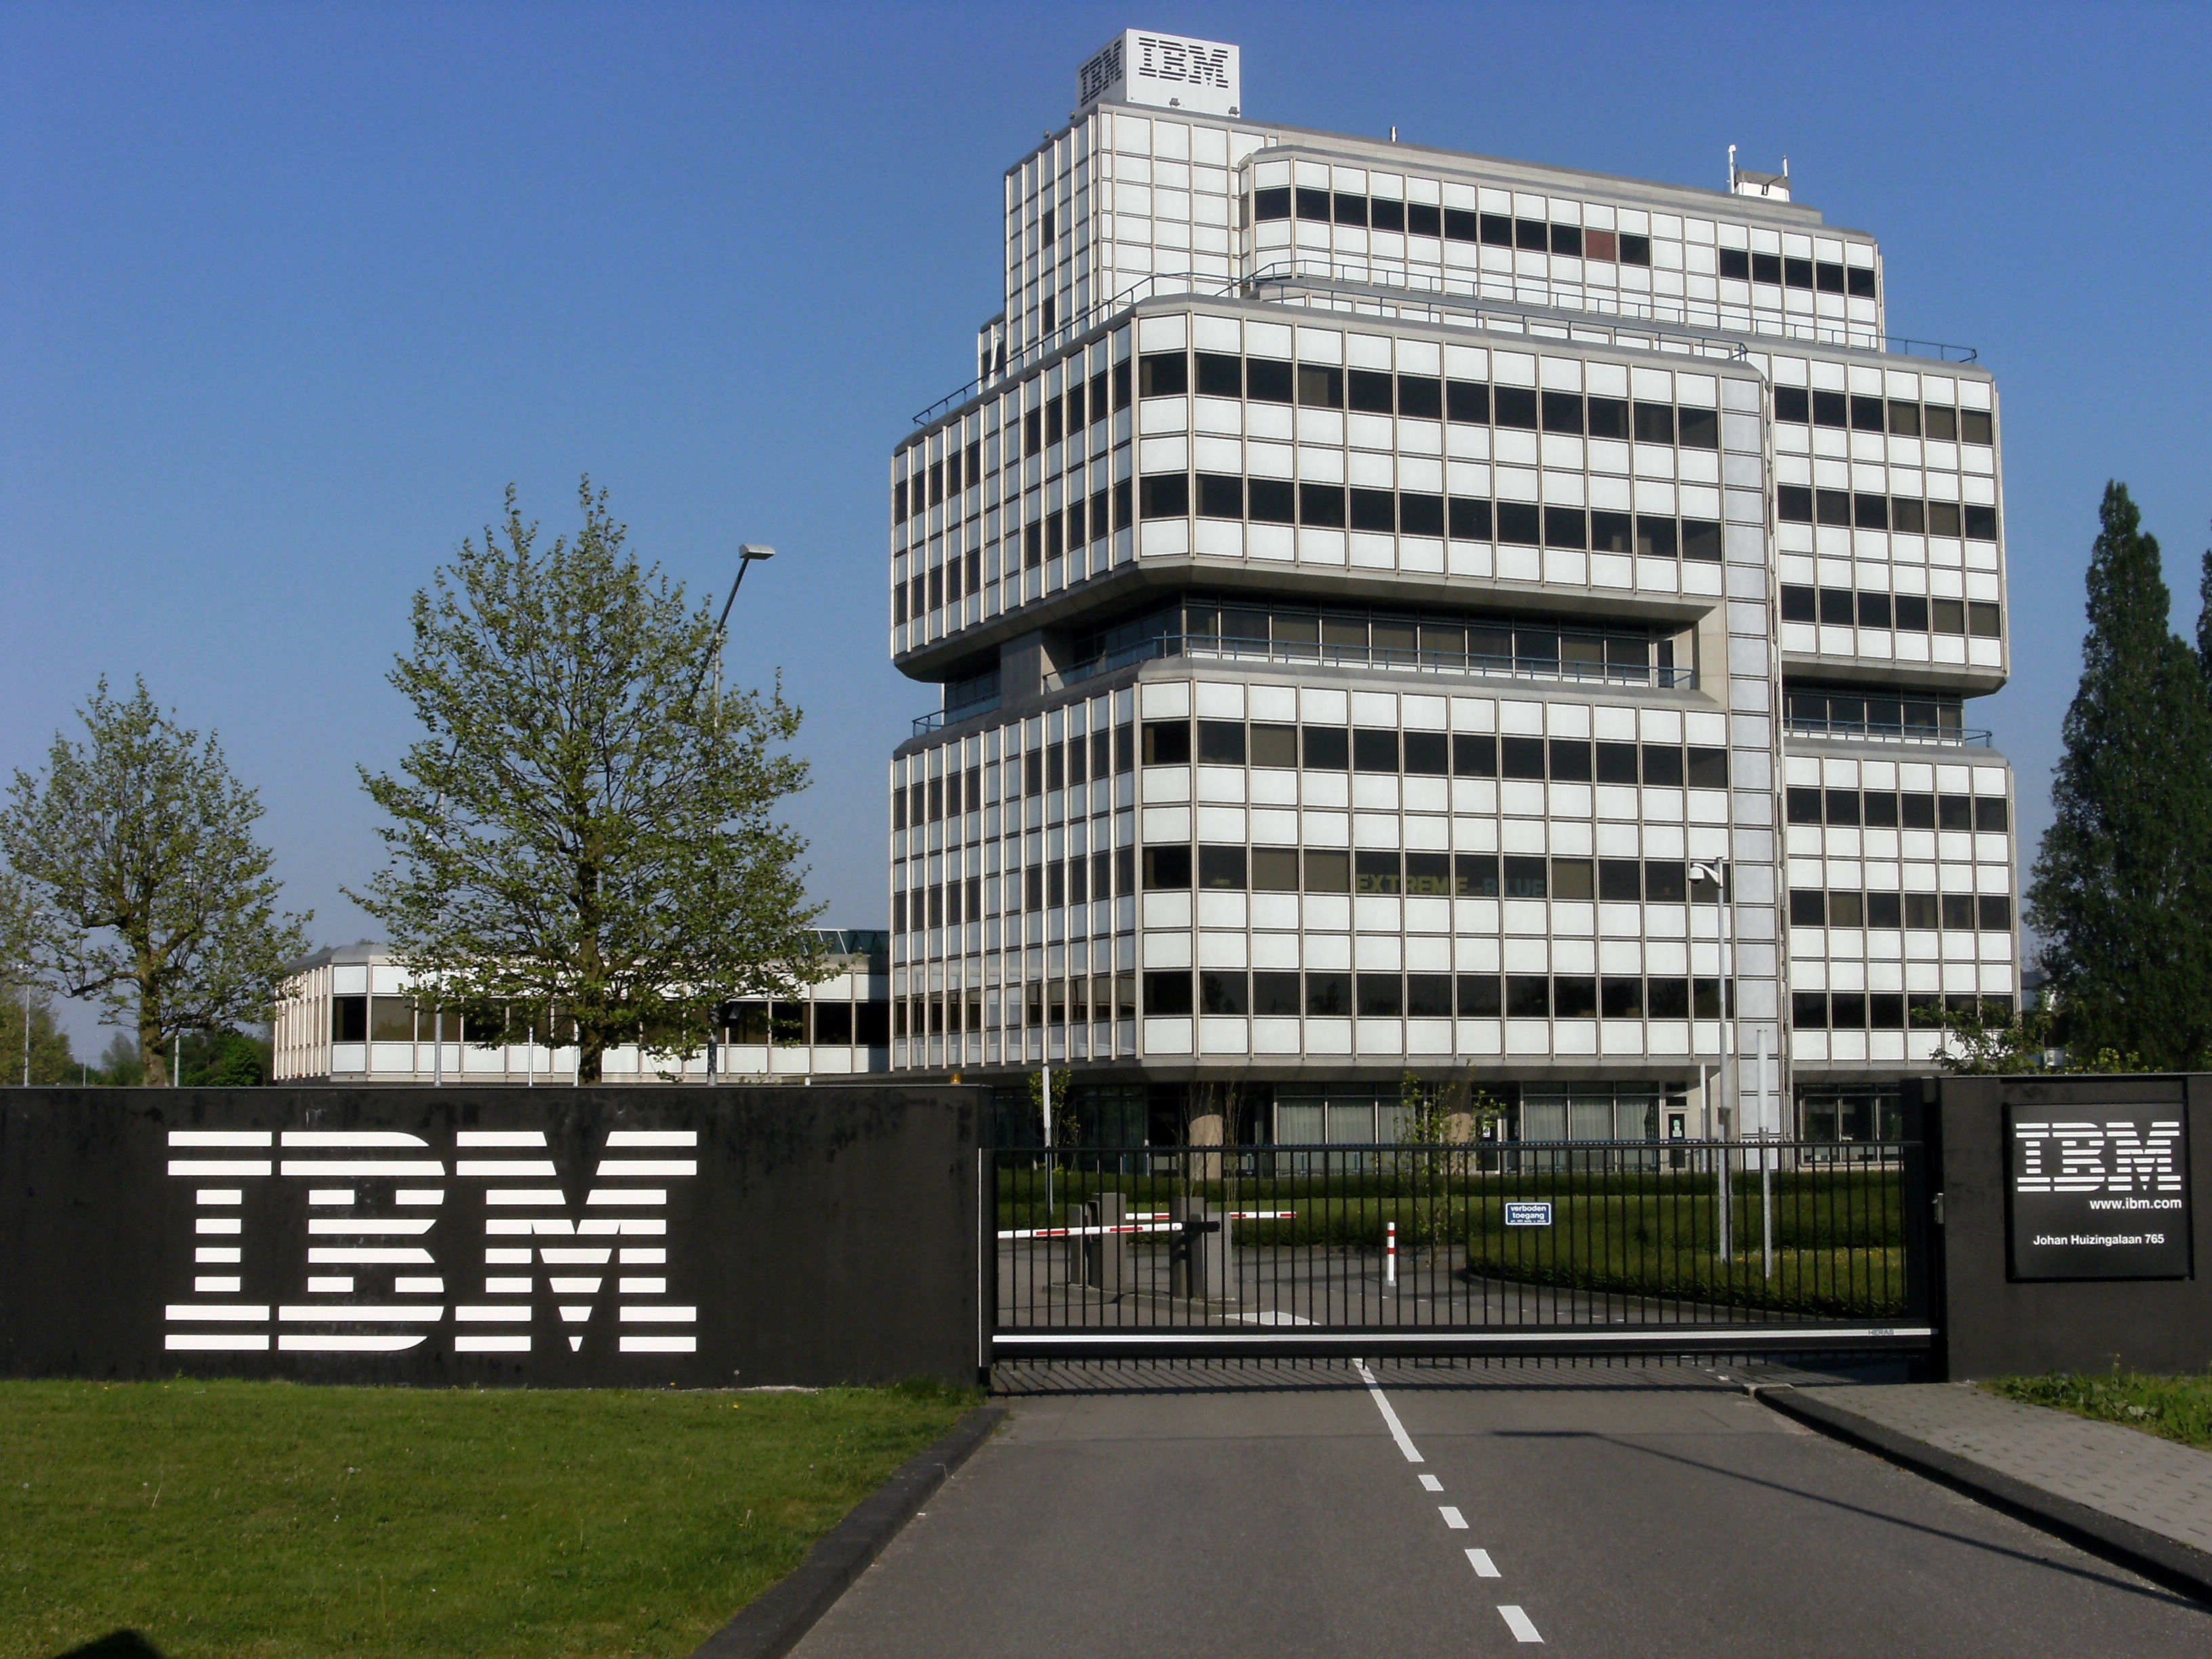 Negócio de servidores da IBM na mira da Dell e Lenovo